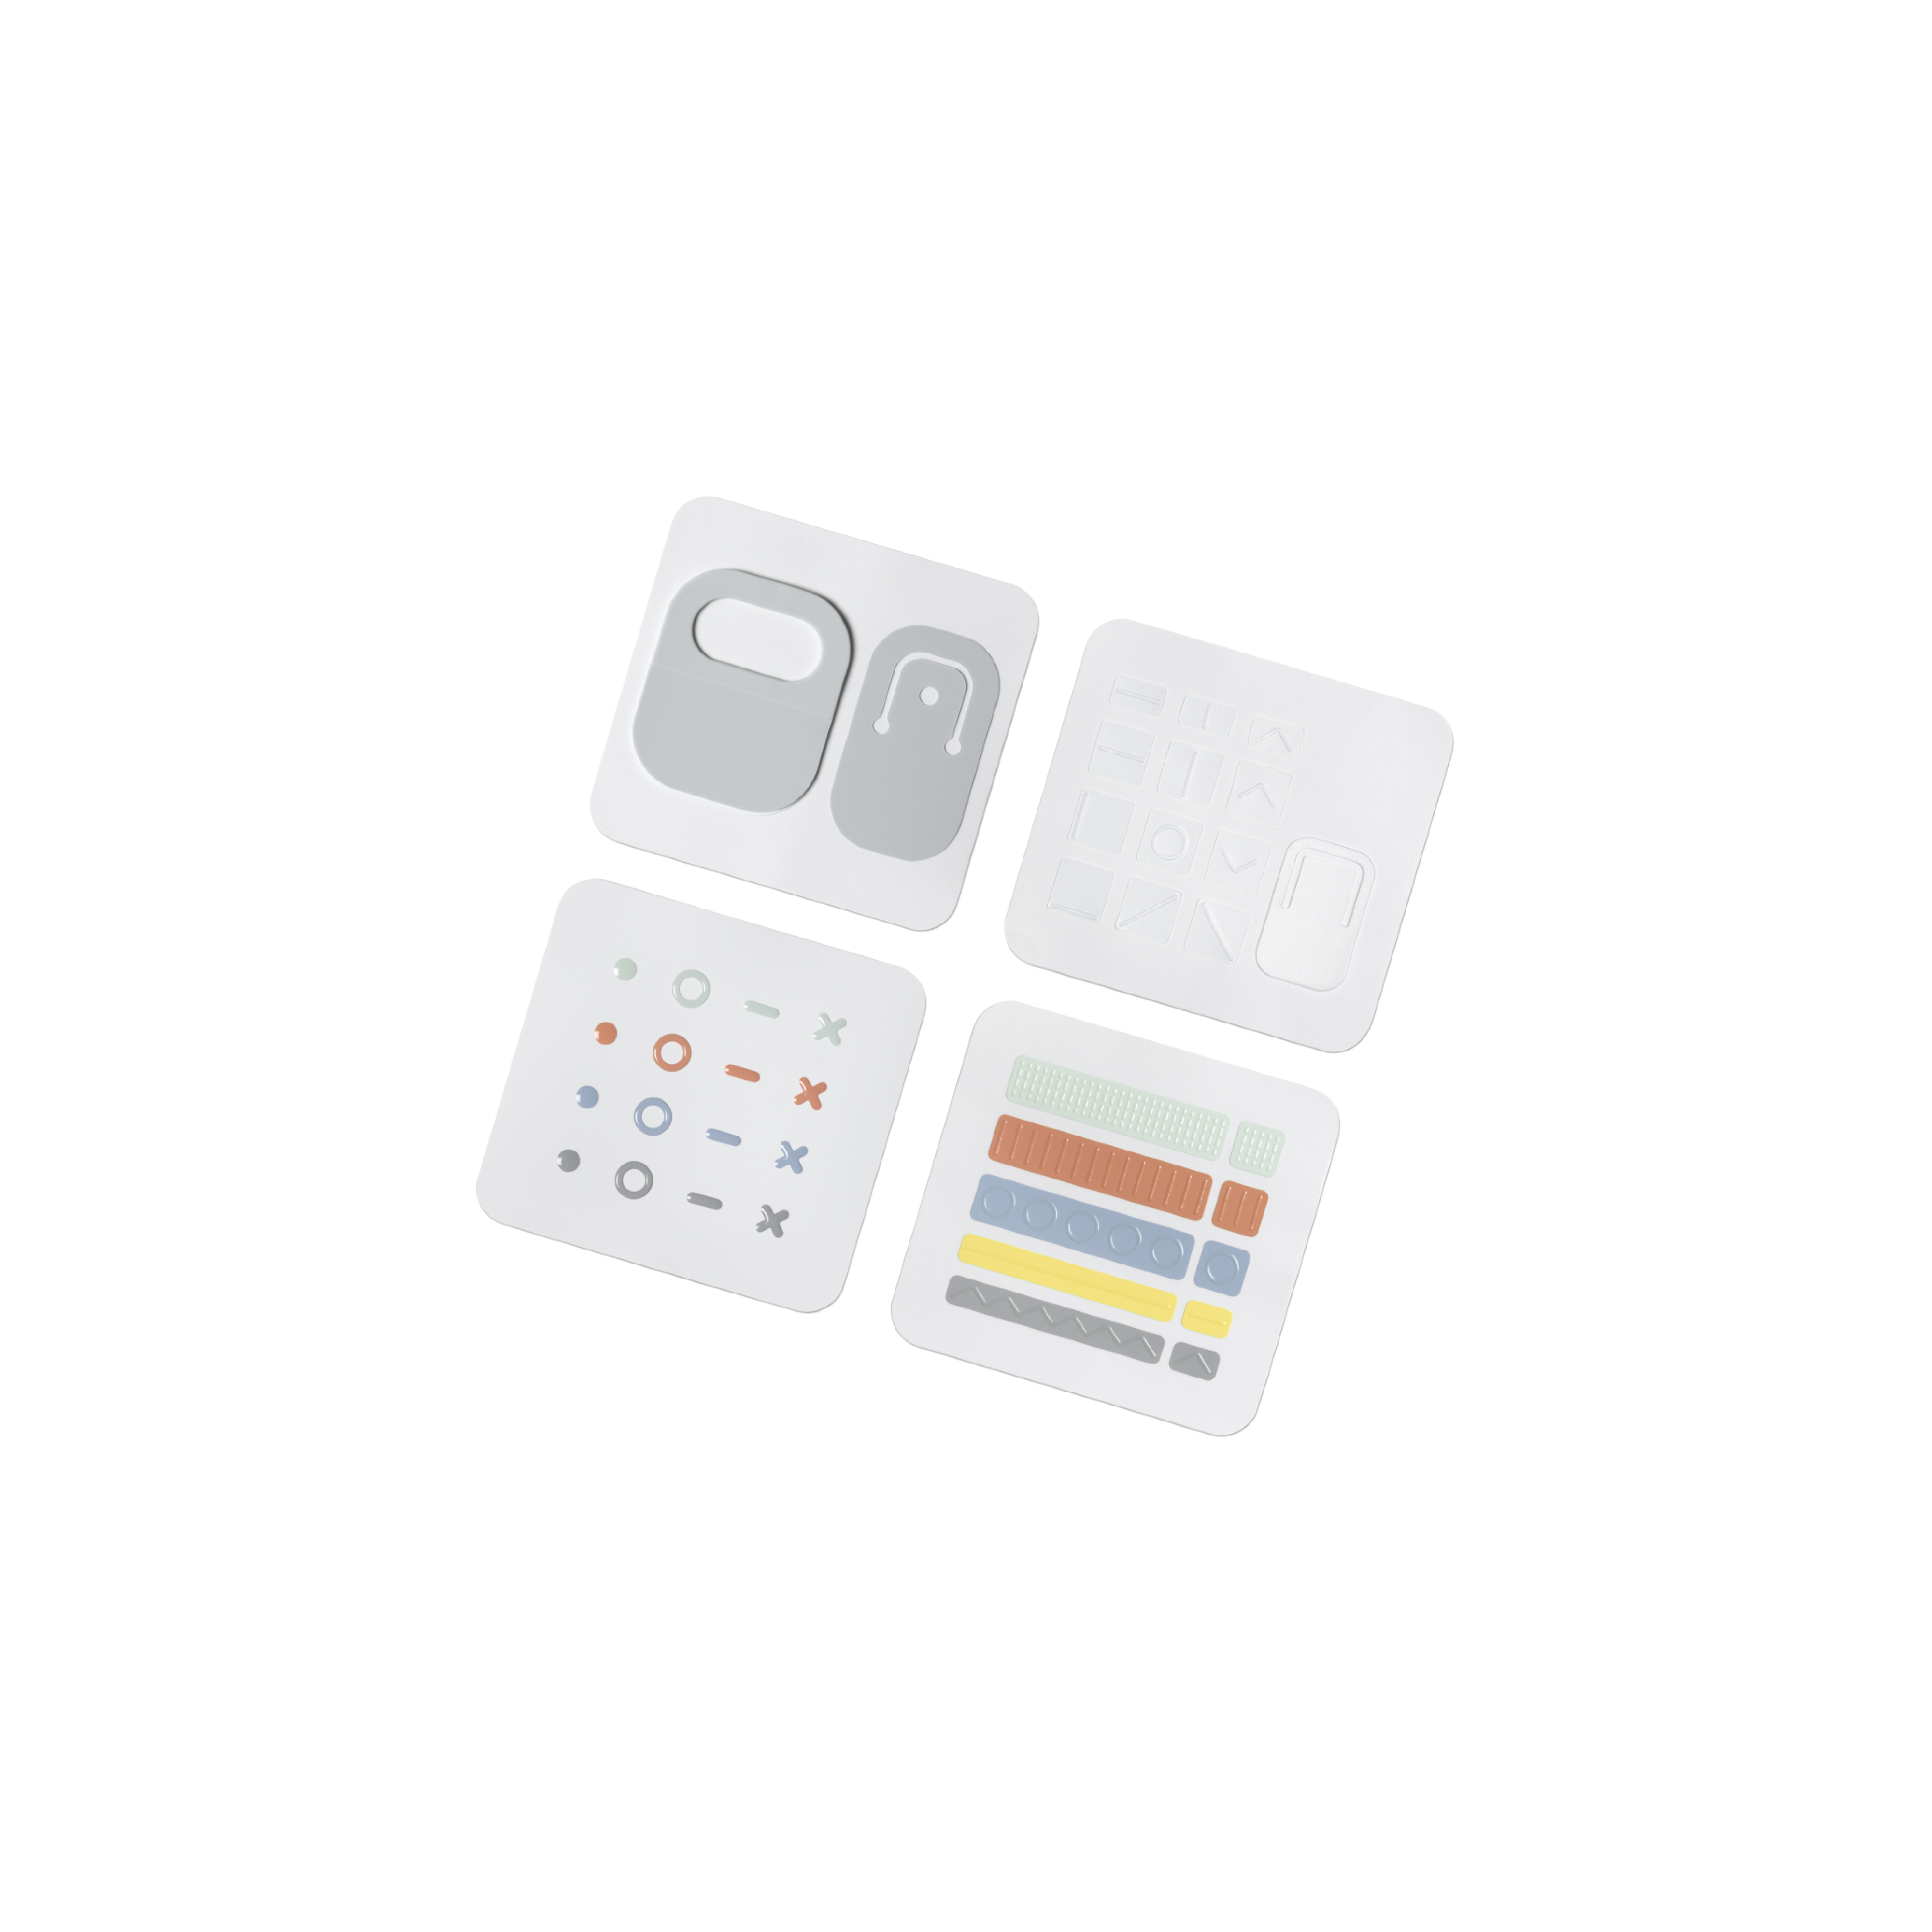 Surface Adaptive Kit